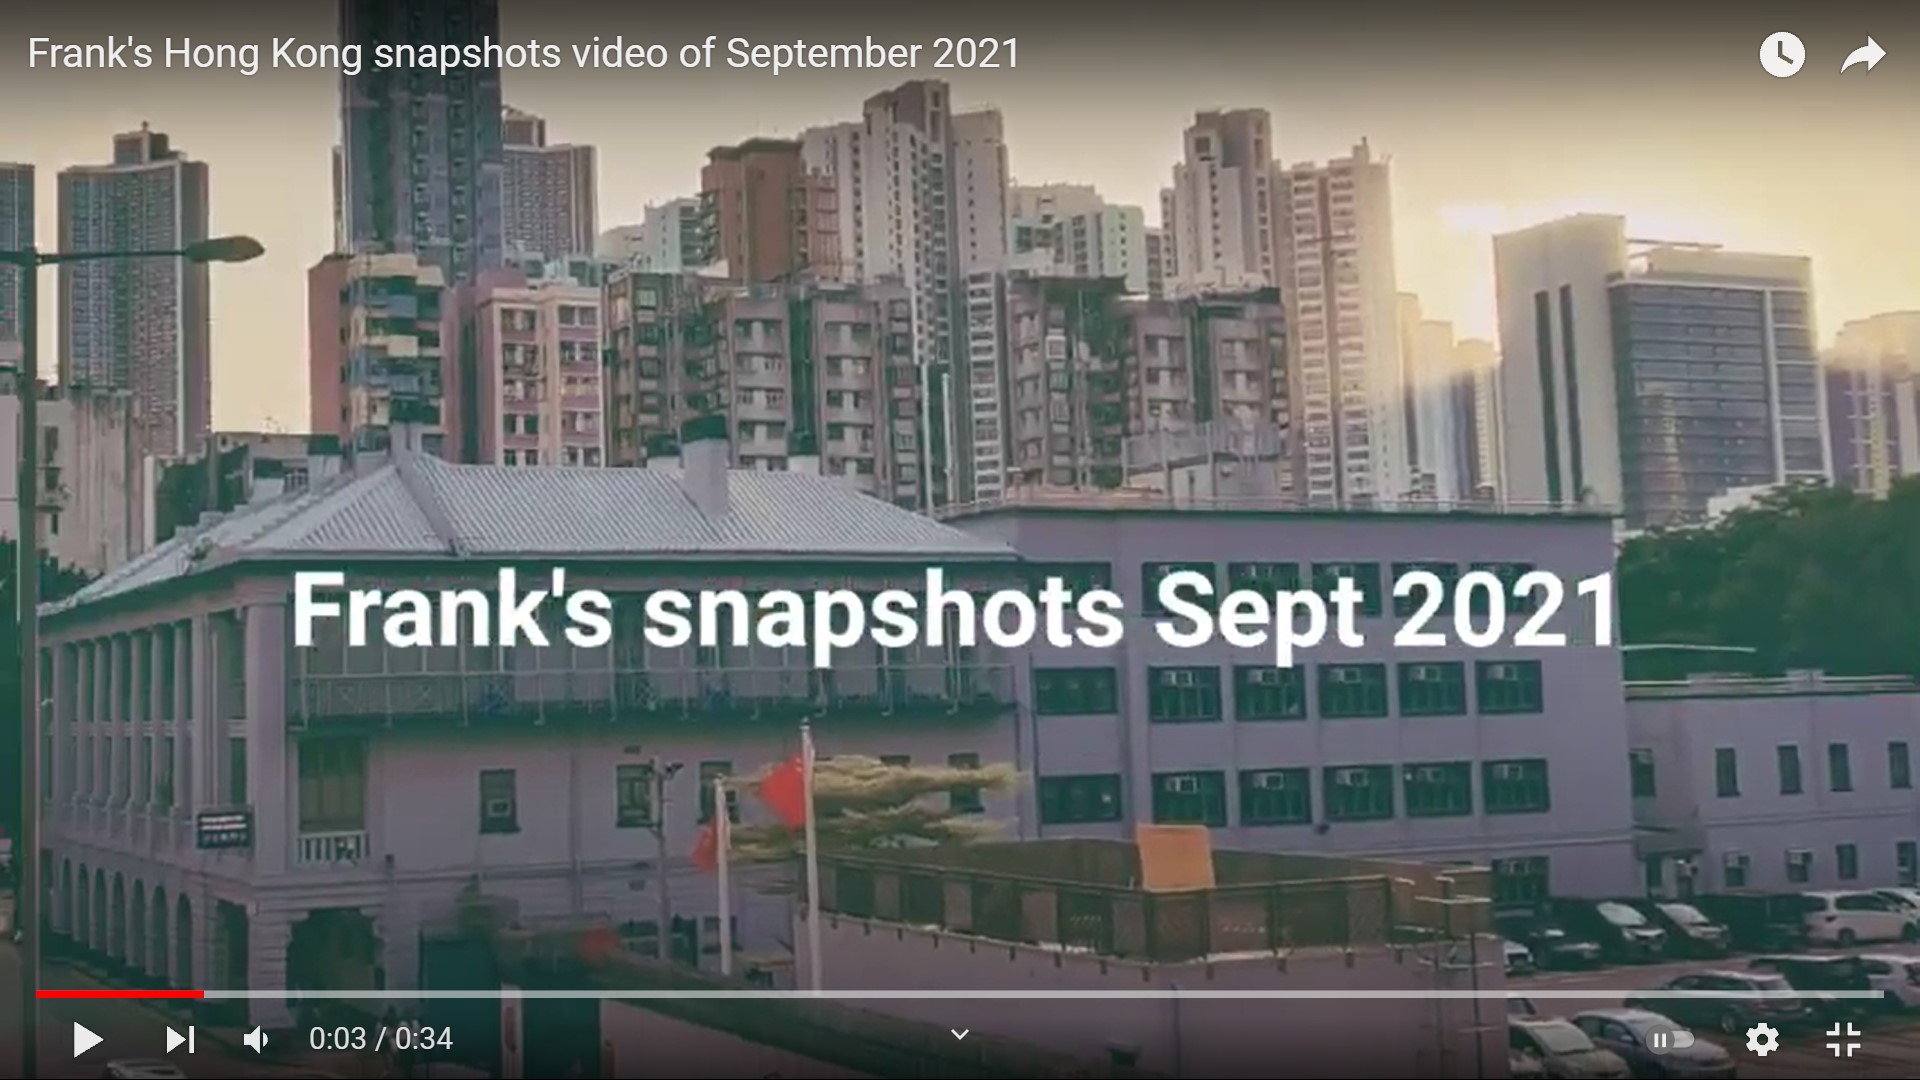 Frank's Hong Kong snapshots video of September 2021